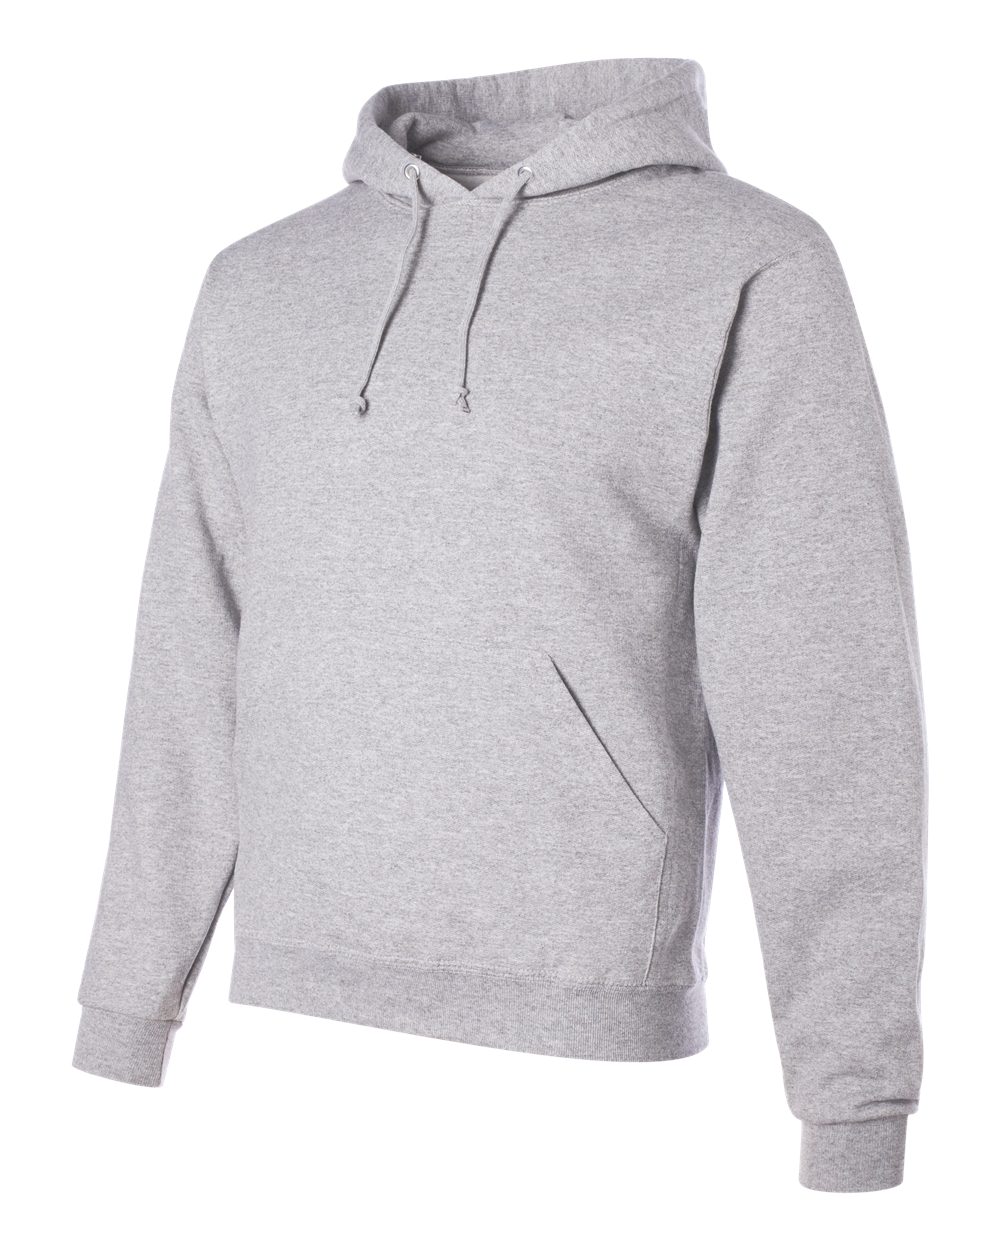 JERZEES 996MR - NuBlend Hooded Sweatshirt